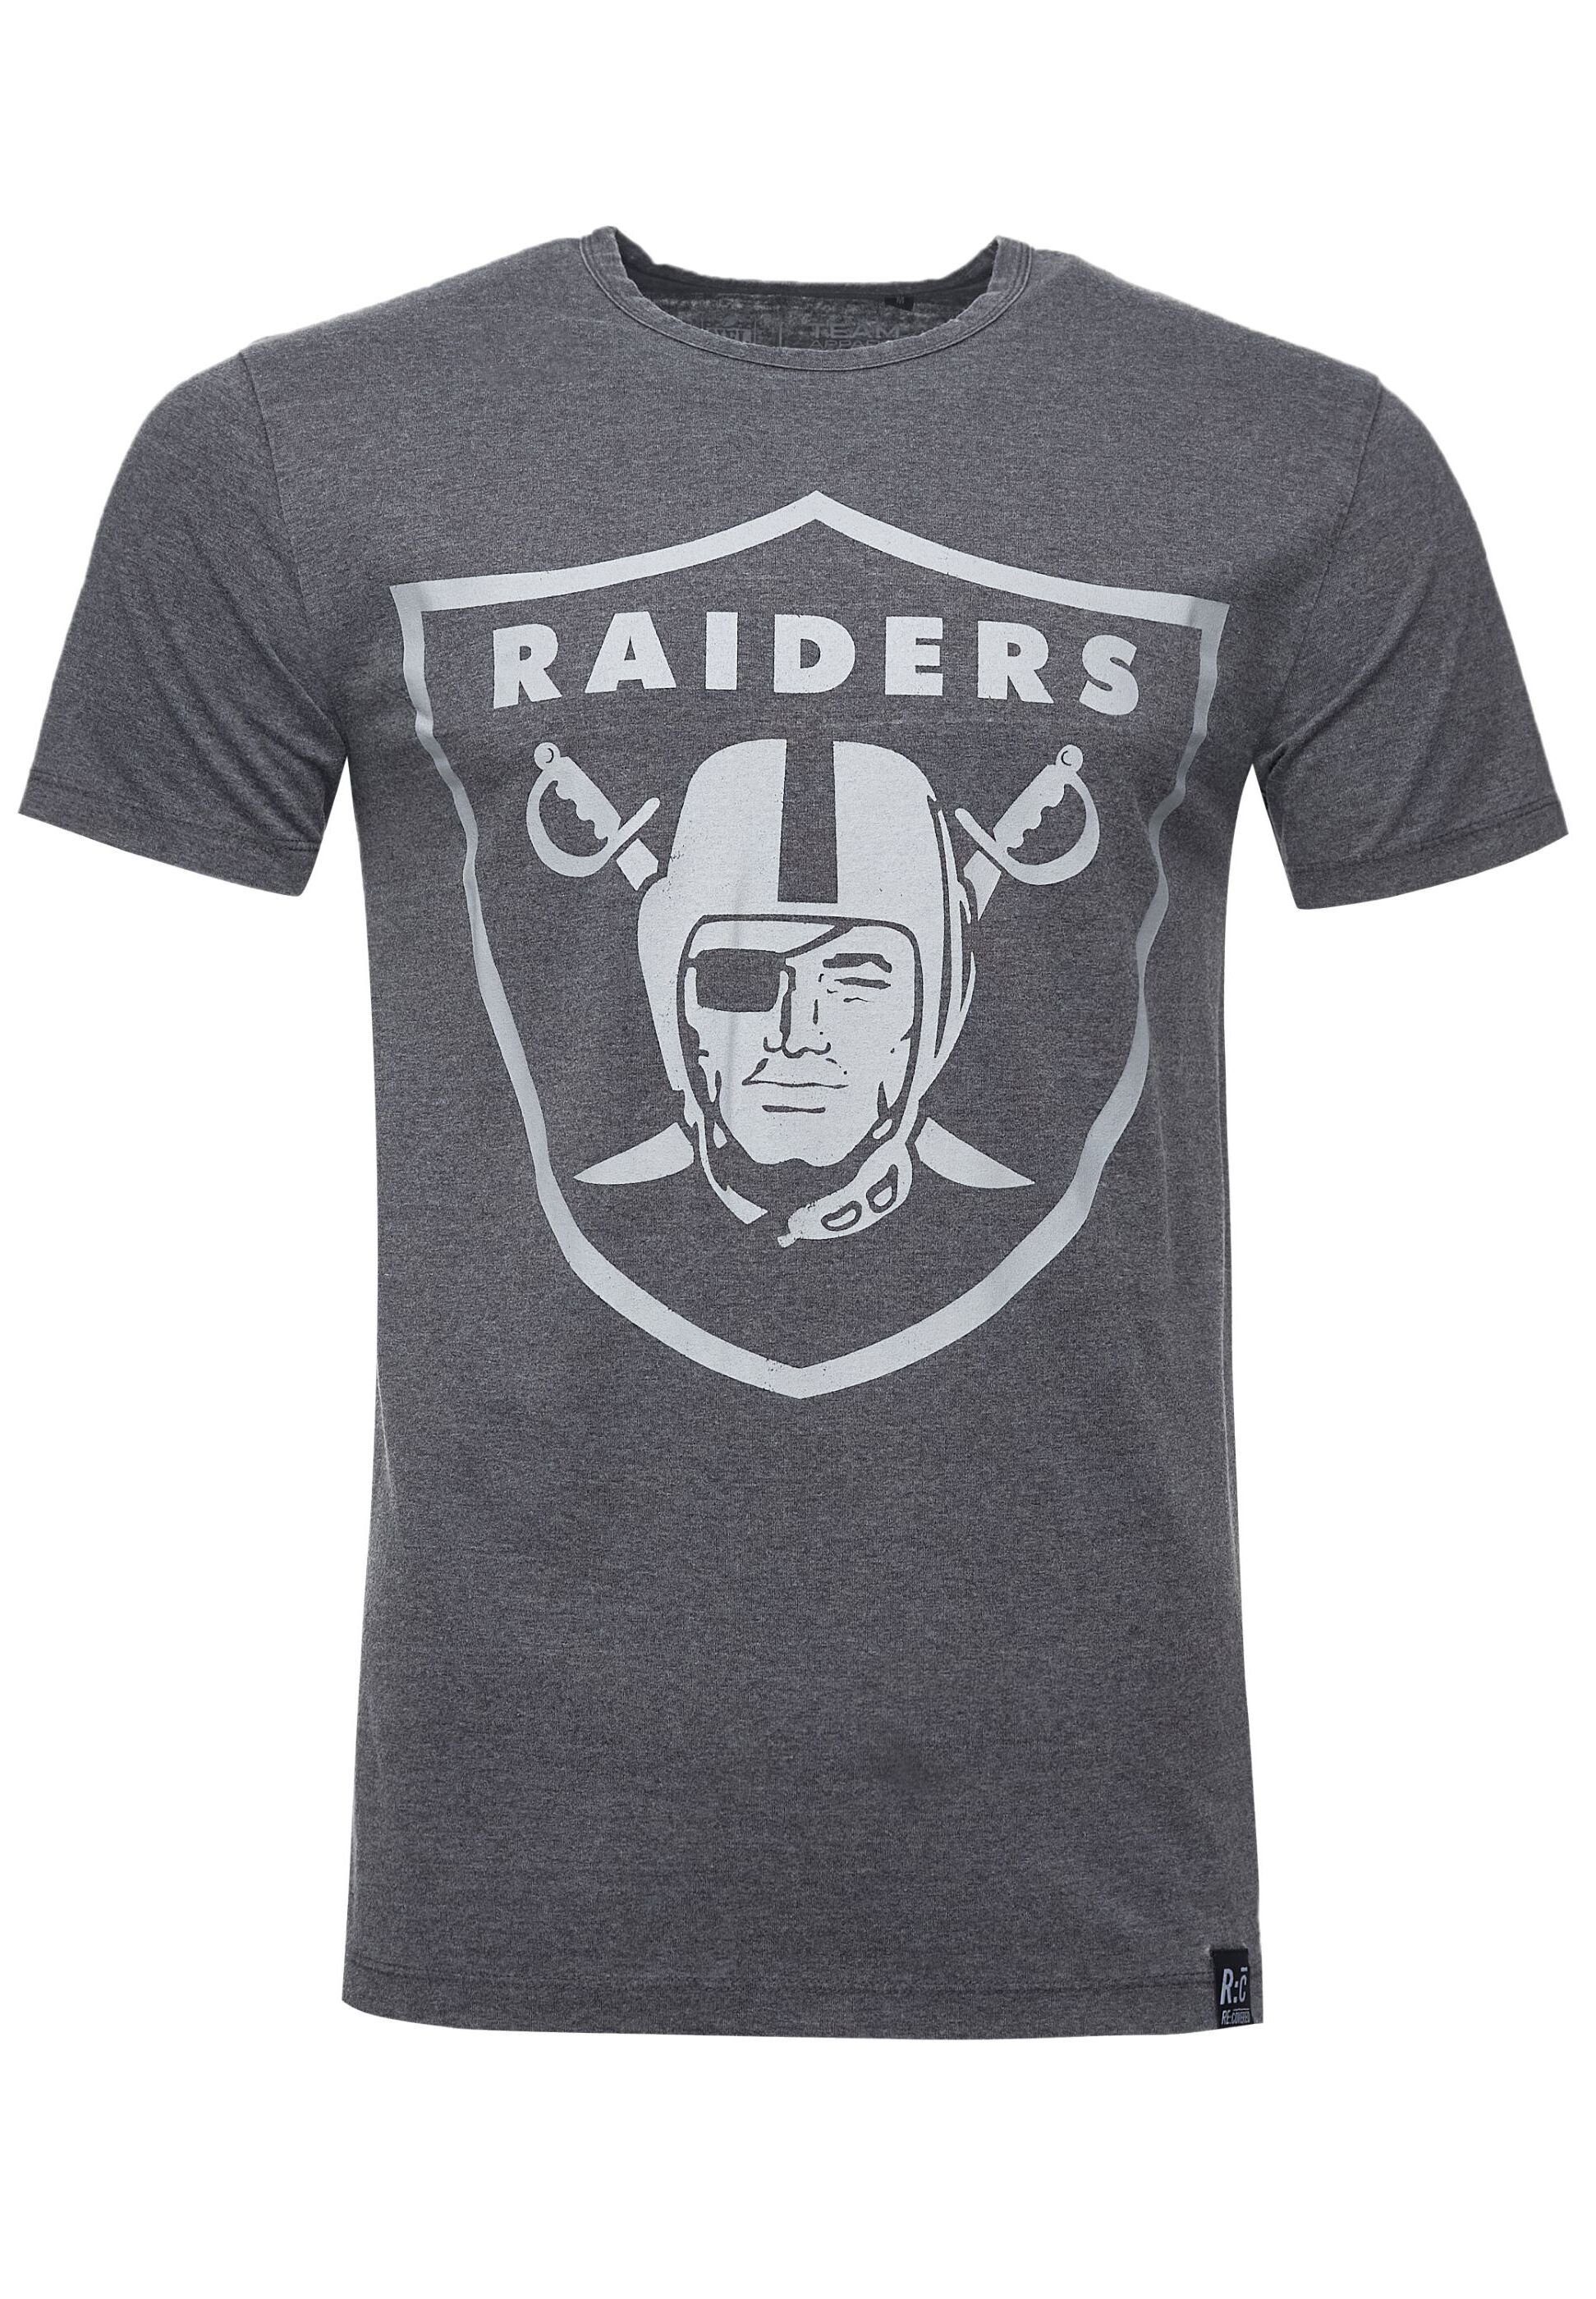 T-Shirt Bio-Baumwolle Raiders GOTS Recovered zertifizierte Classic NFL Kohlegrau Vintage